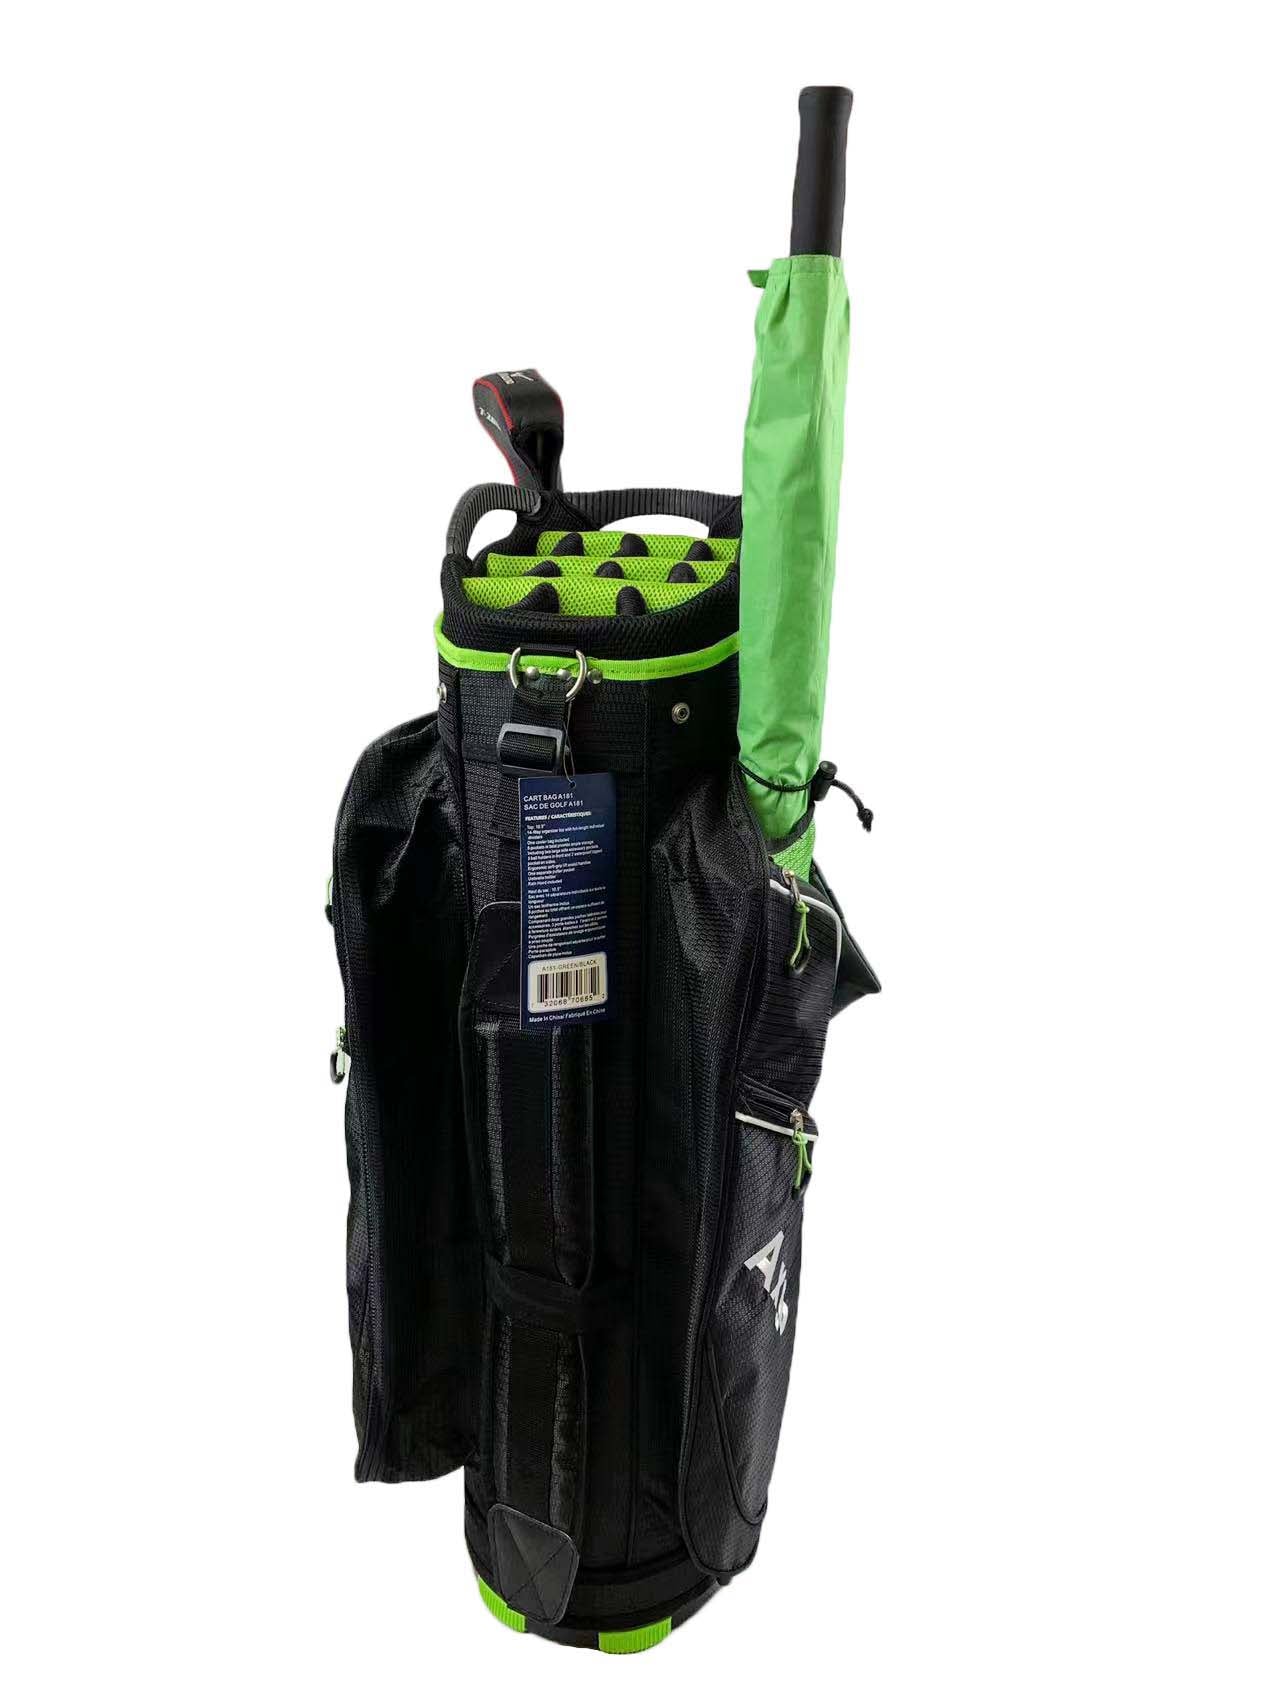 Axglo Golf Cart Bag - Green/Black